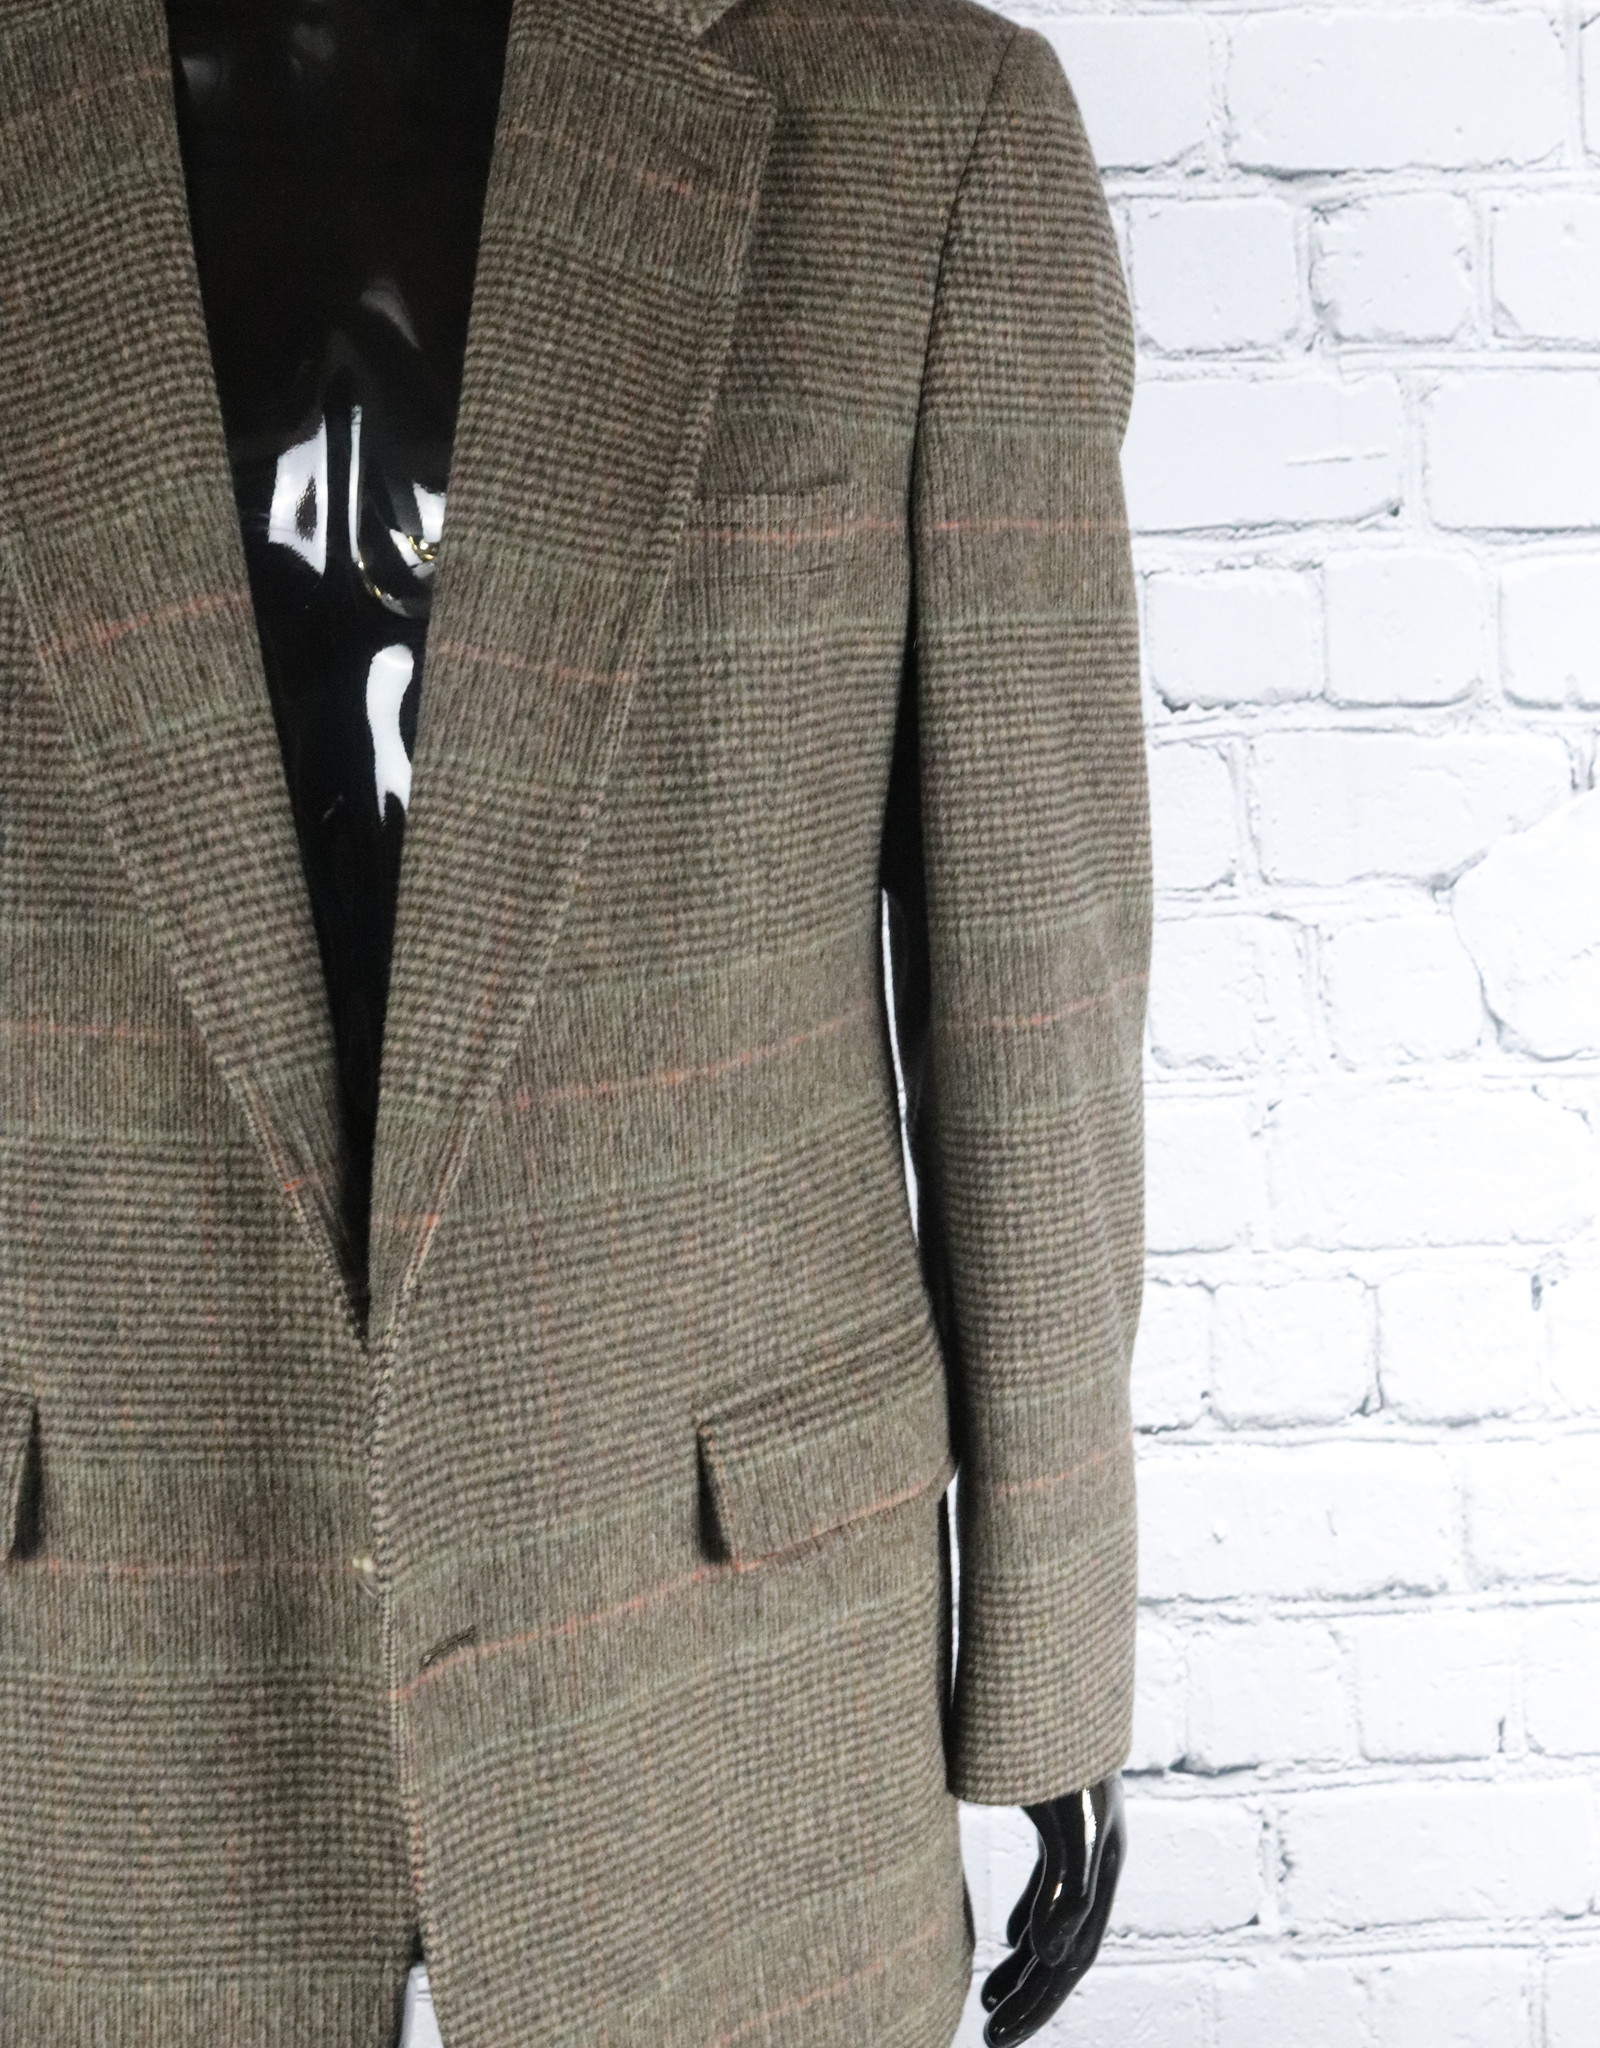 JoS. A. Banks: Vintage Brown and Grey Plaid Blazer for Guys